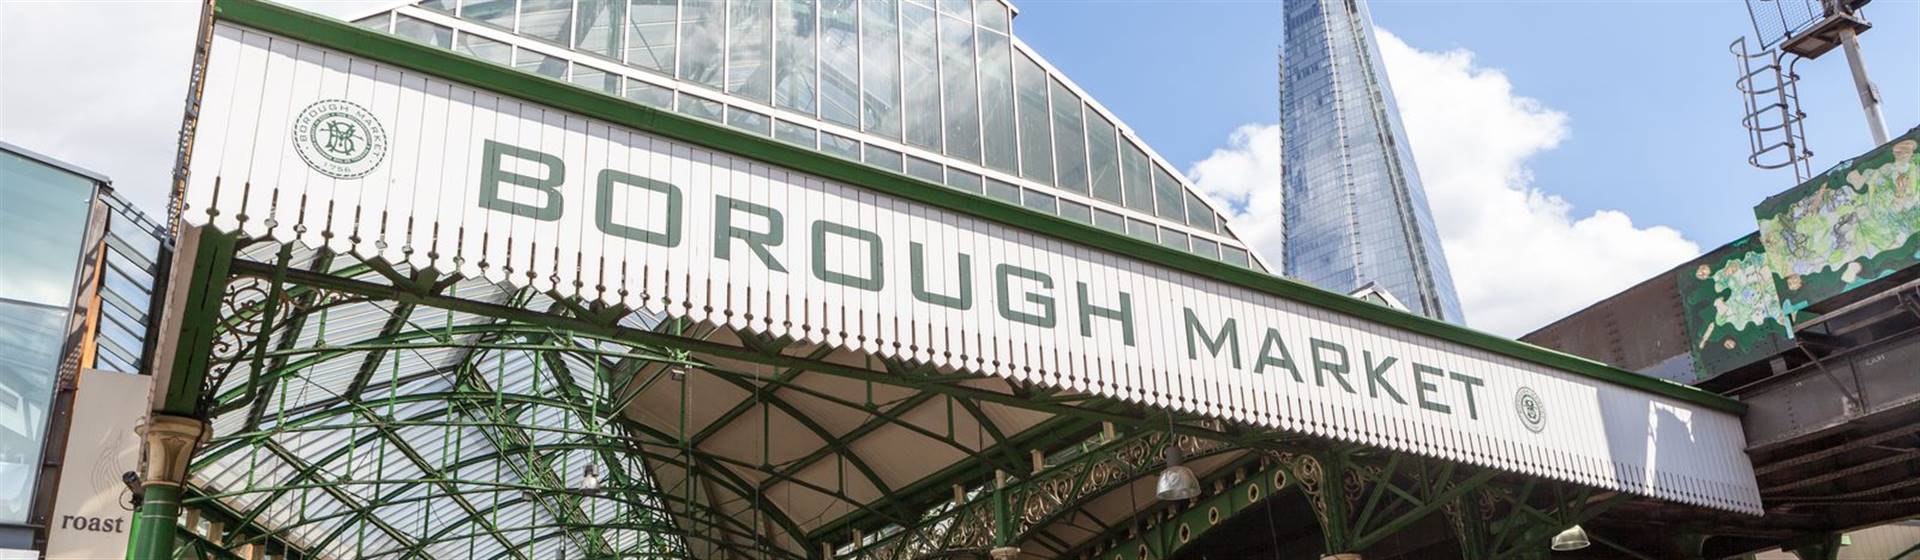 Borough Market: Londons Finest Food Market 